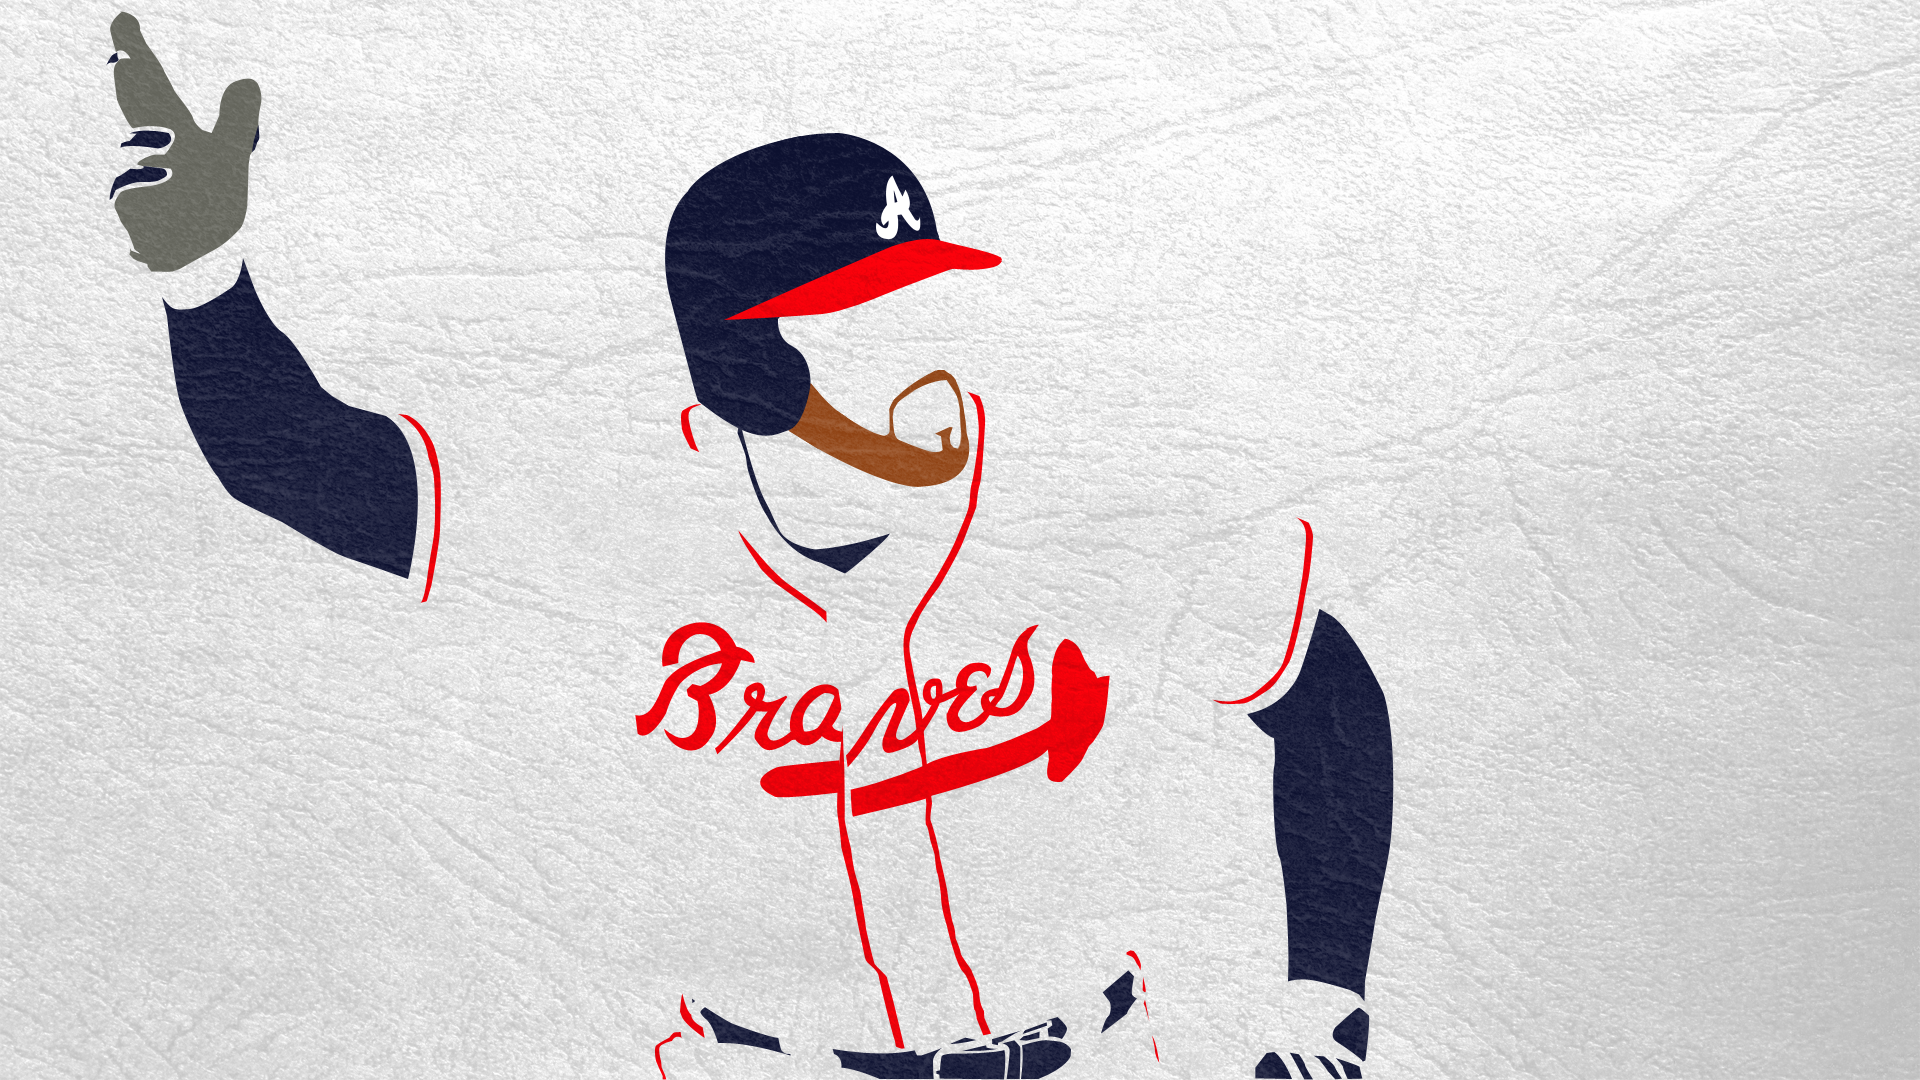 Freeman Braves wallpaper by SportxEdits - Download on ZEDGE™